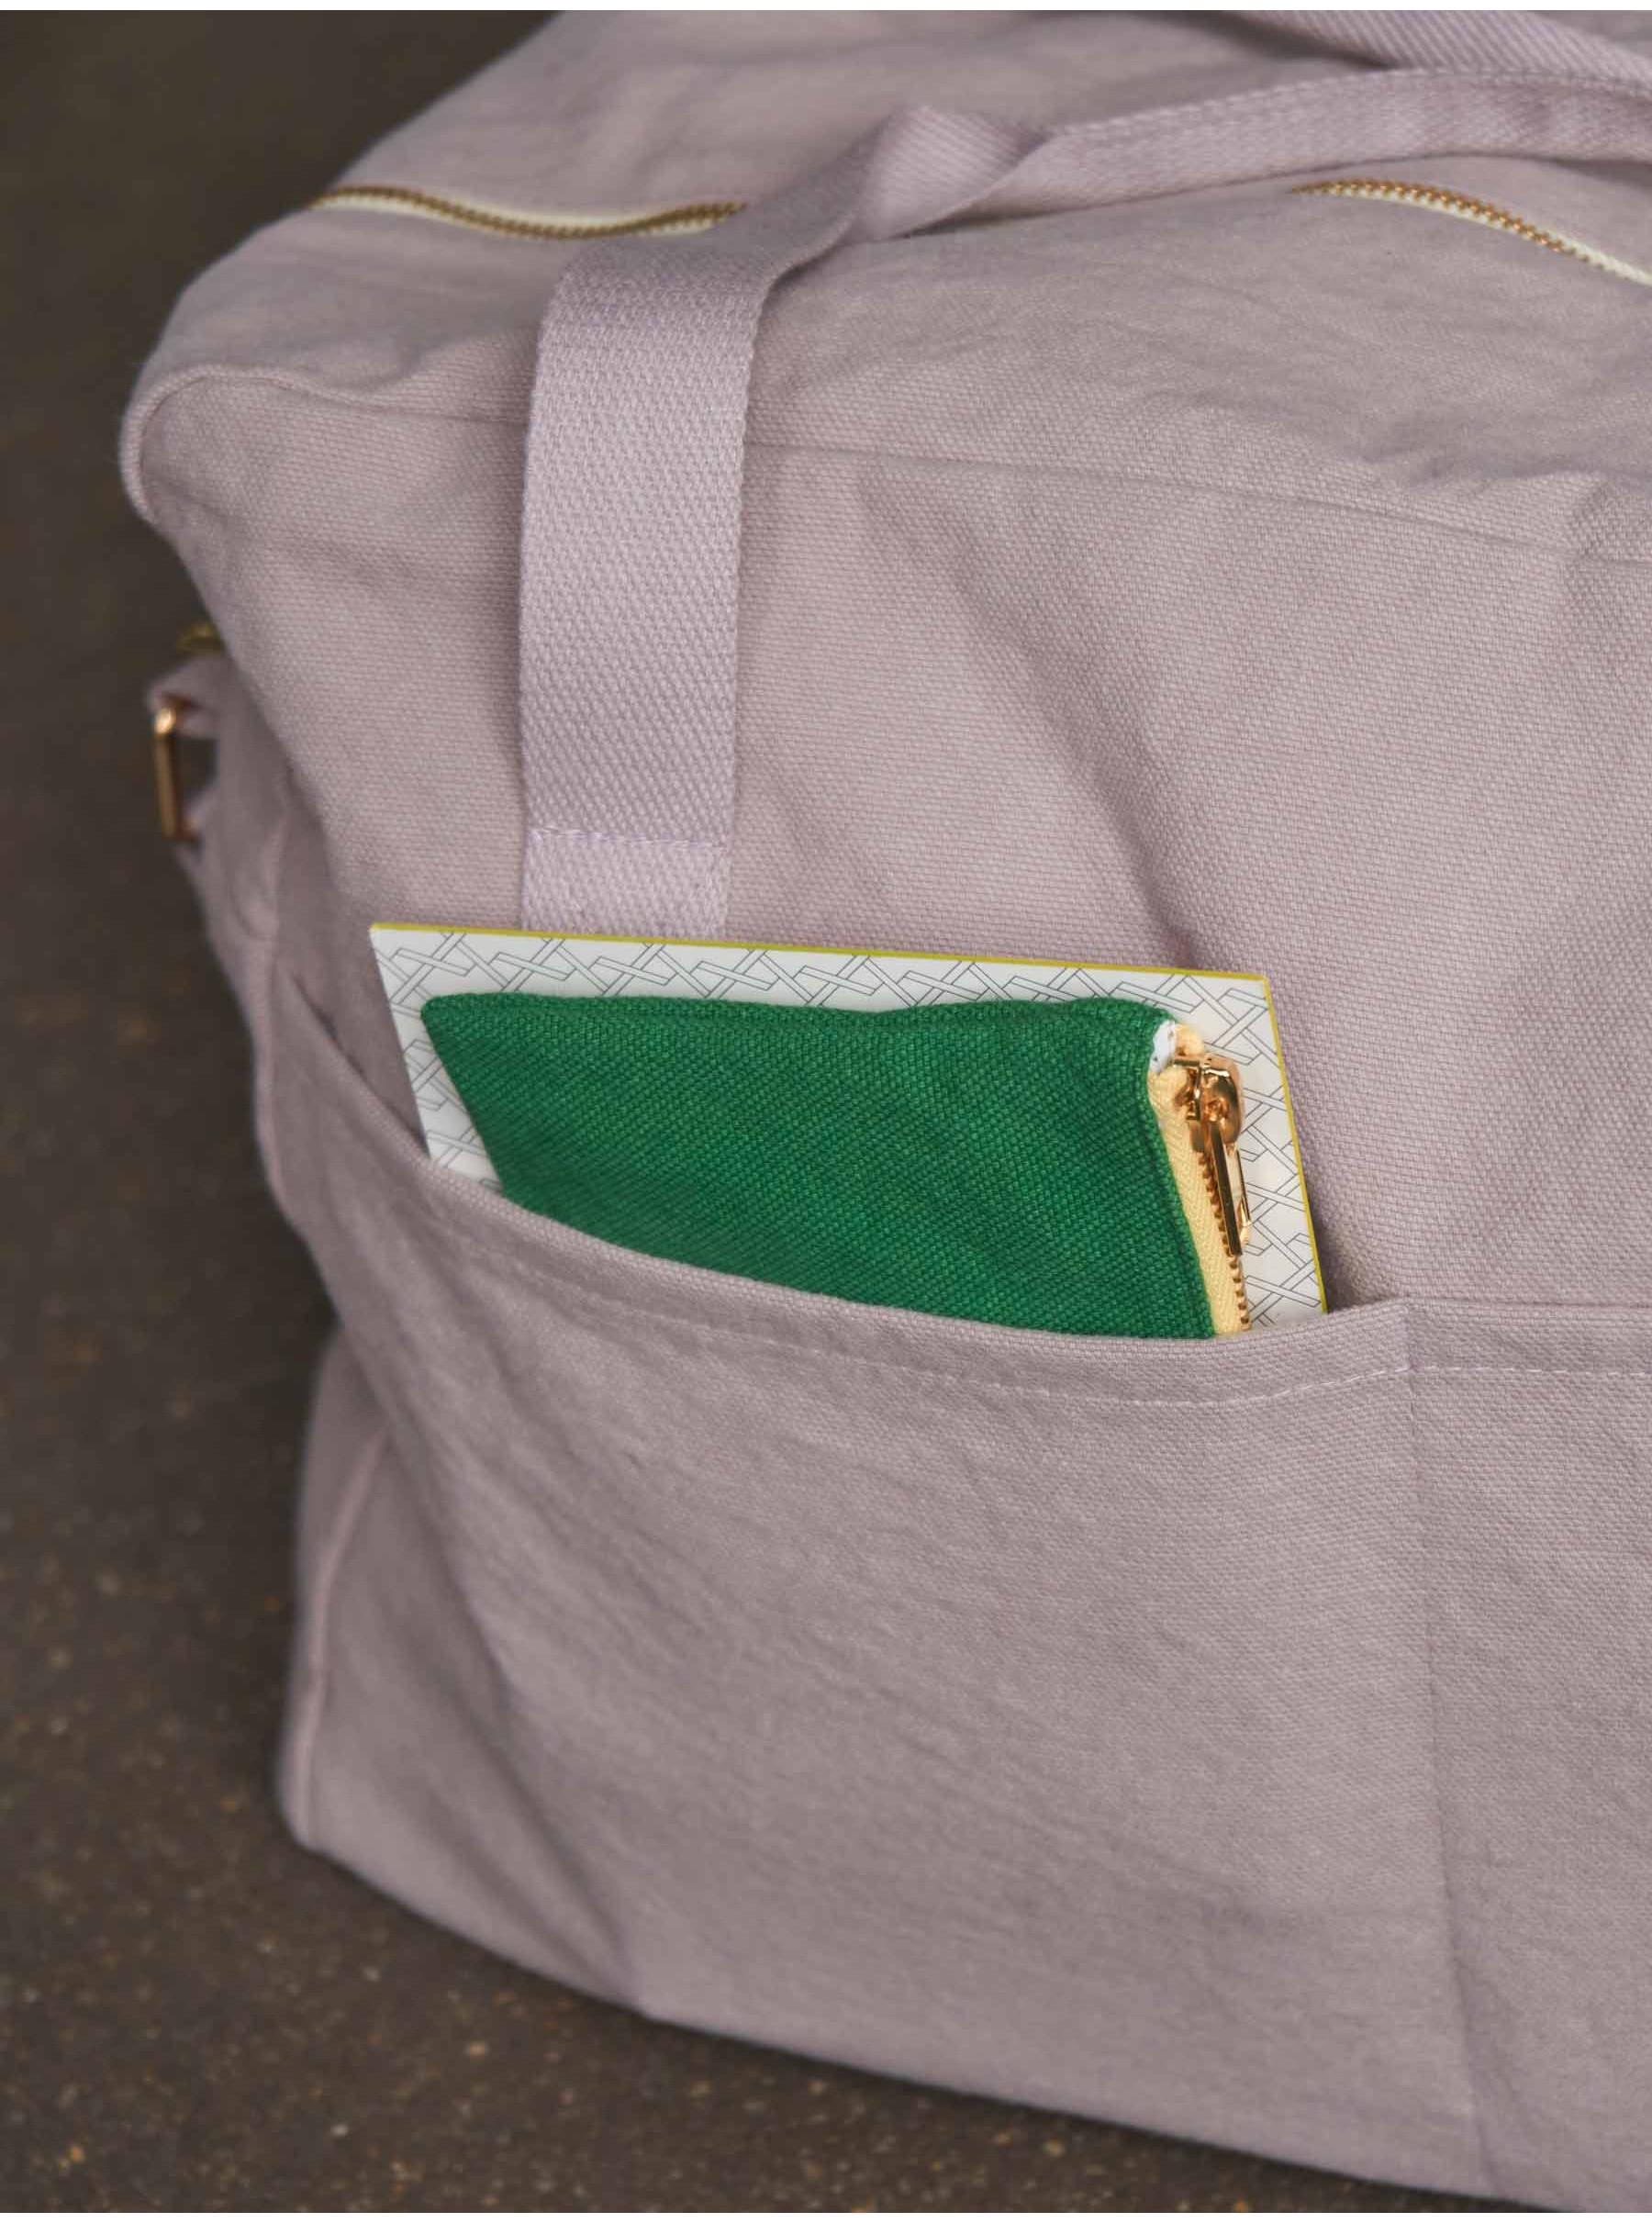 Travel bag organic cotton